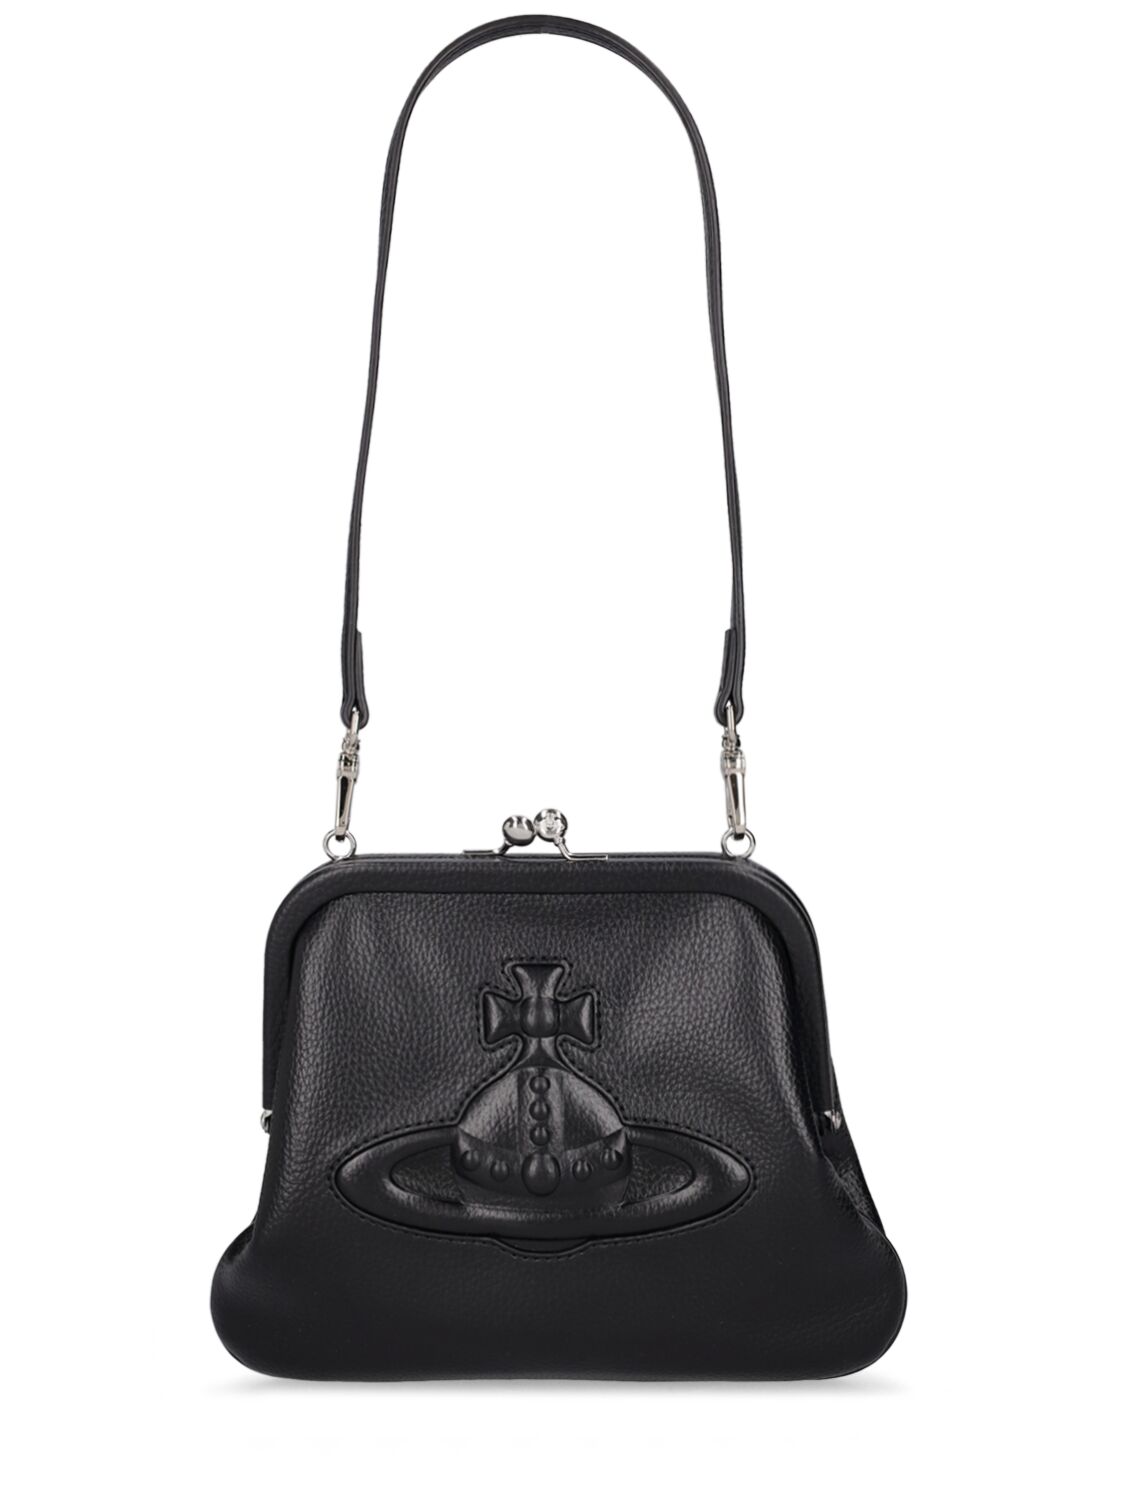 Vivienne Westwood Vivienne's Faux Leather Embossed Clutch In Black